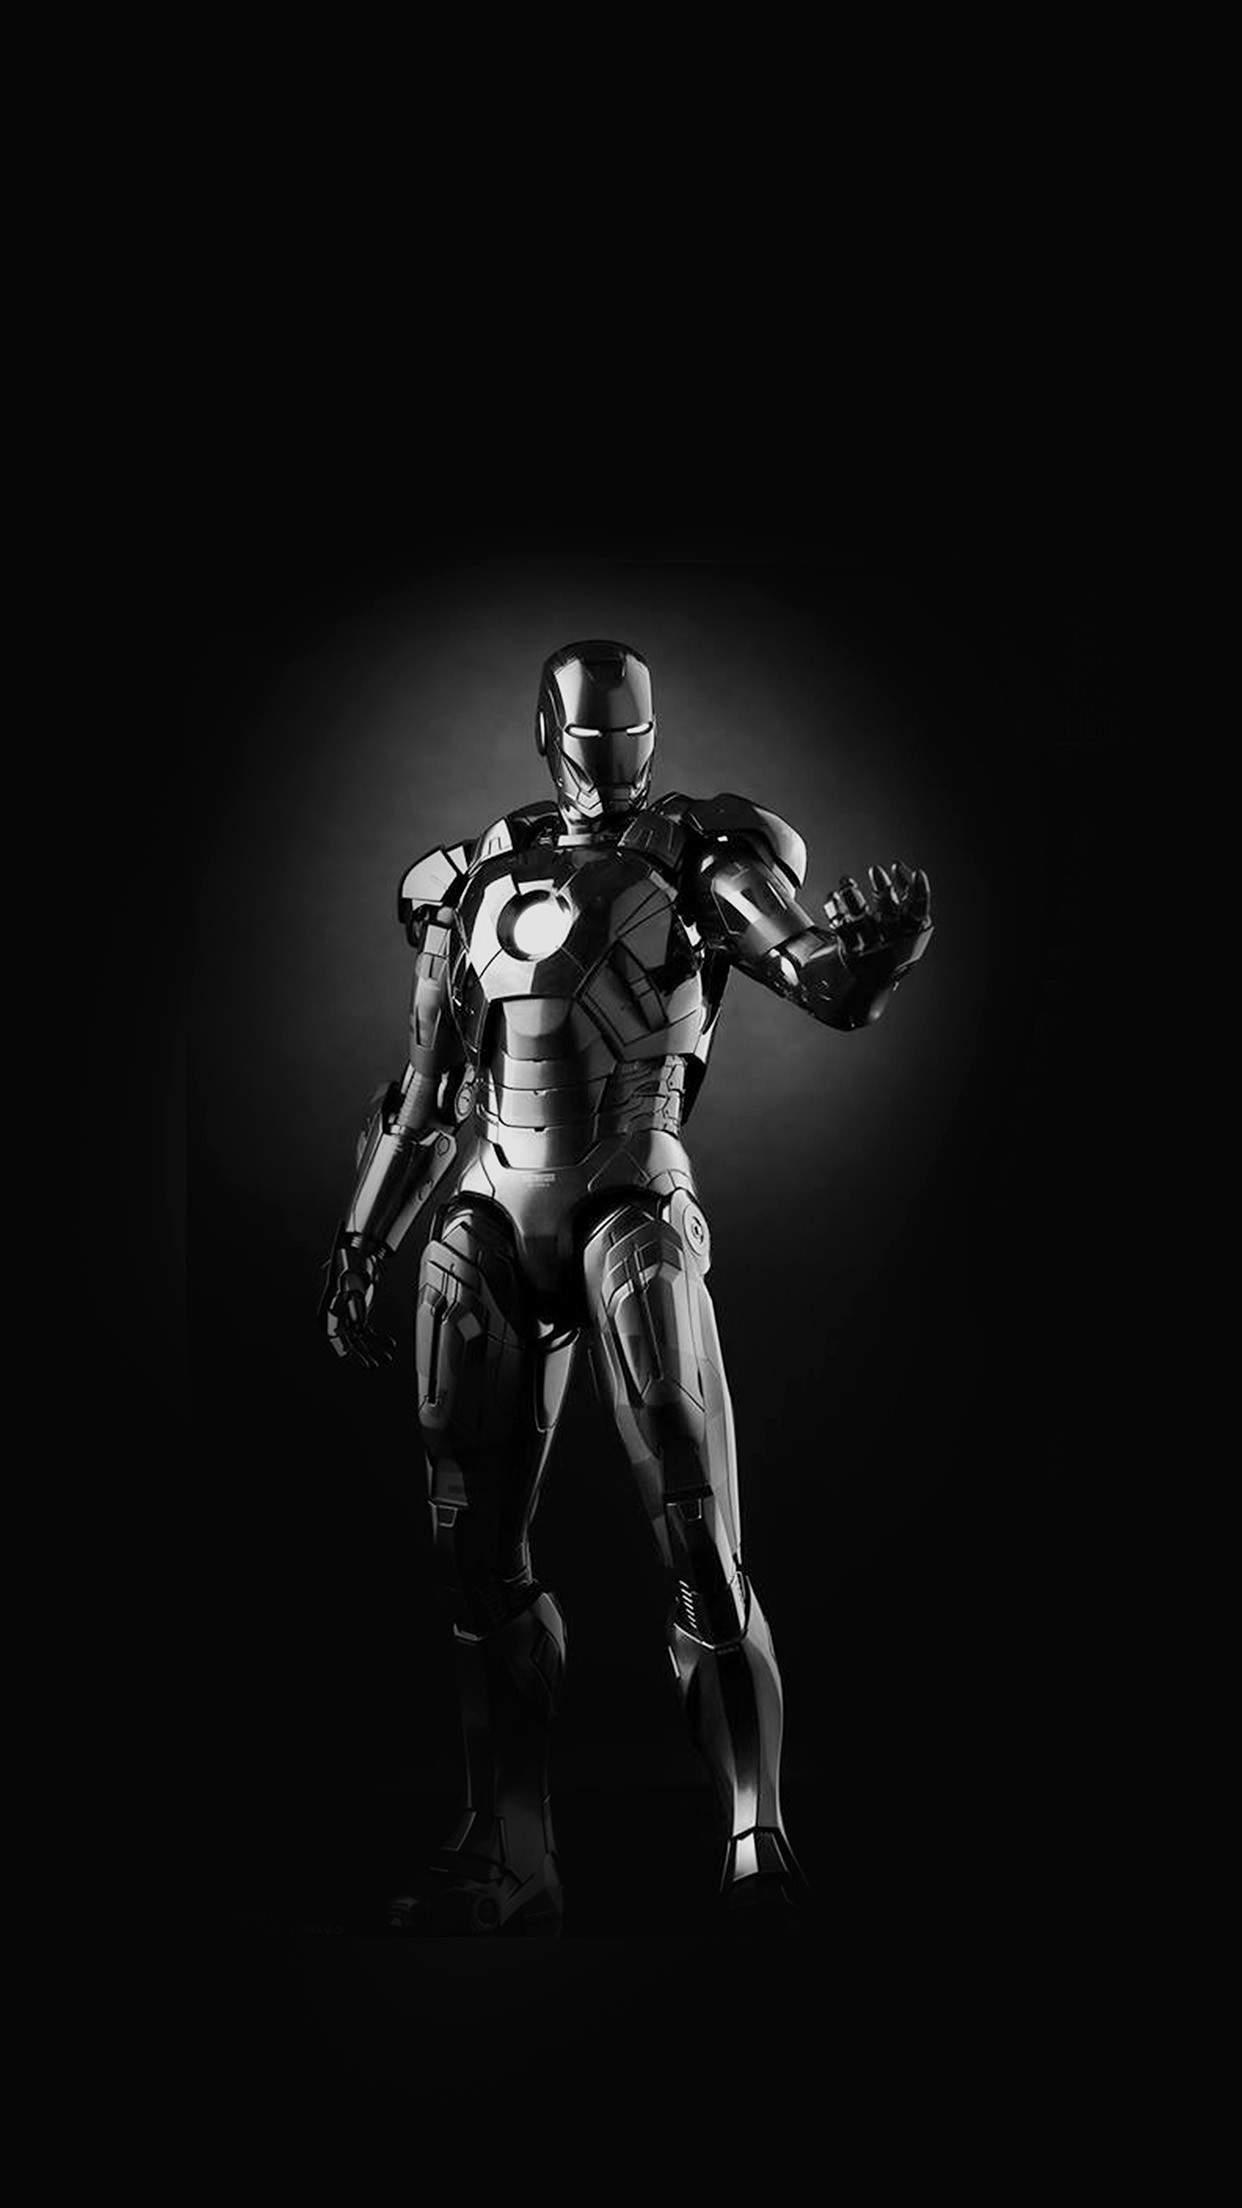 1242x2208 ... ironman dark figure hero art avengers bw iPhone 7 wallpaper ...